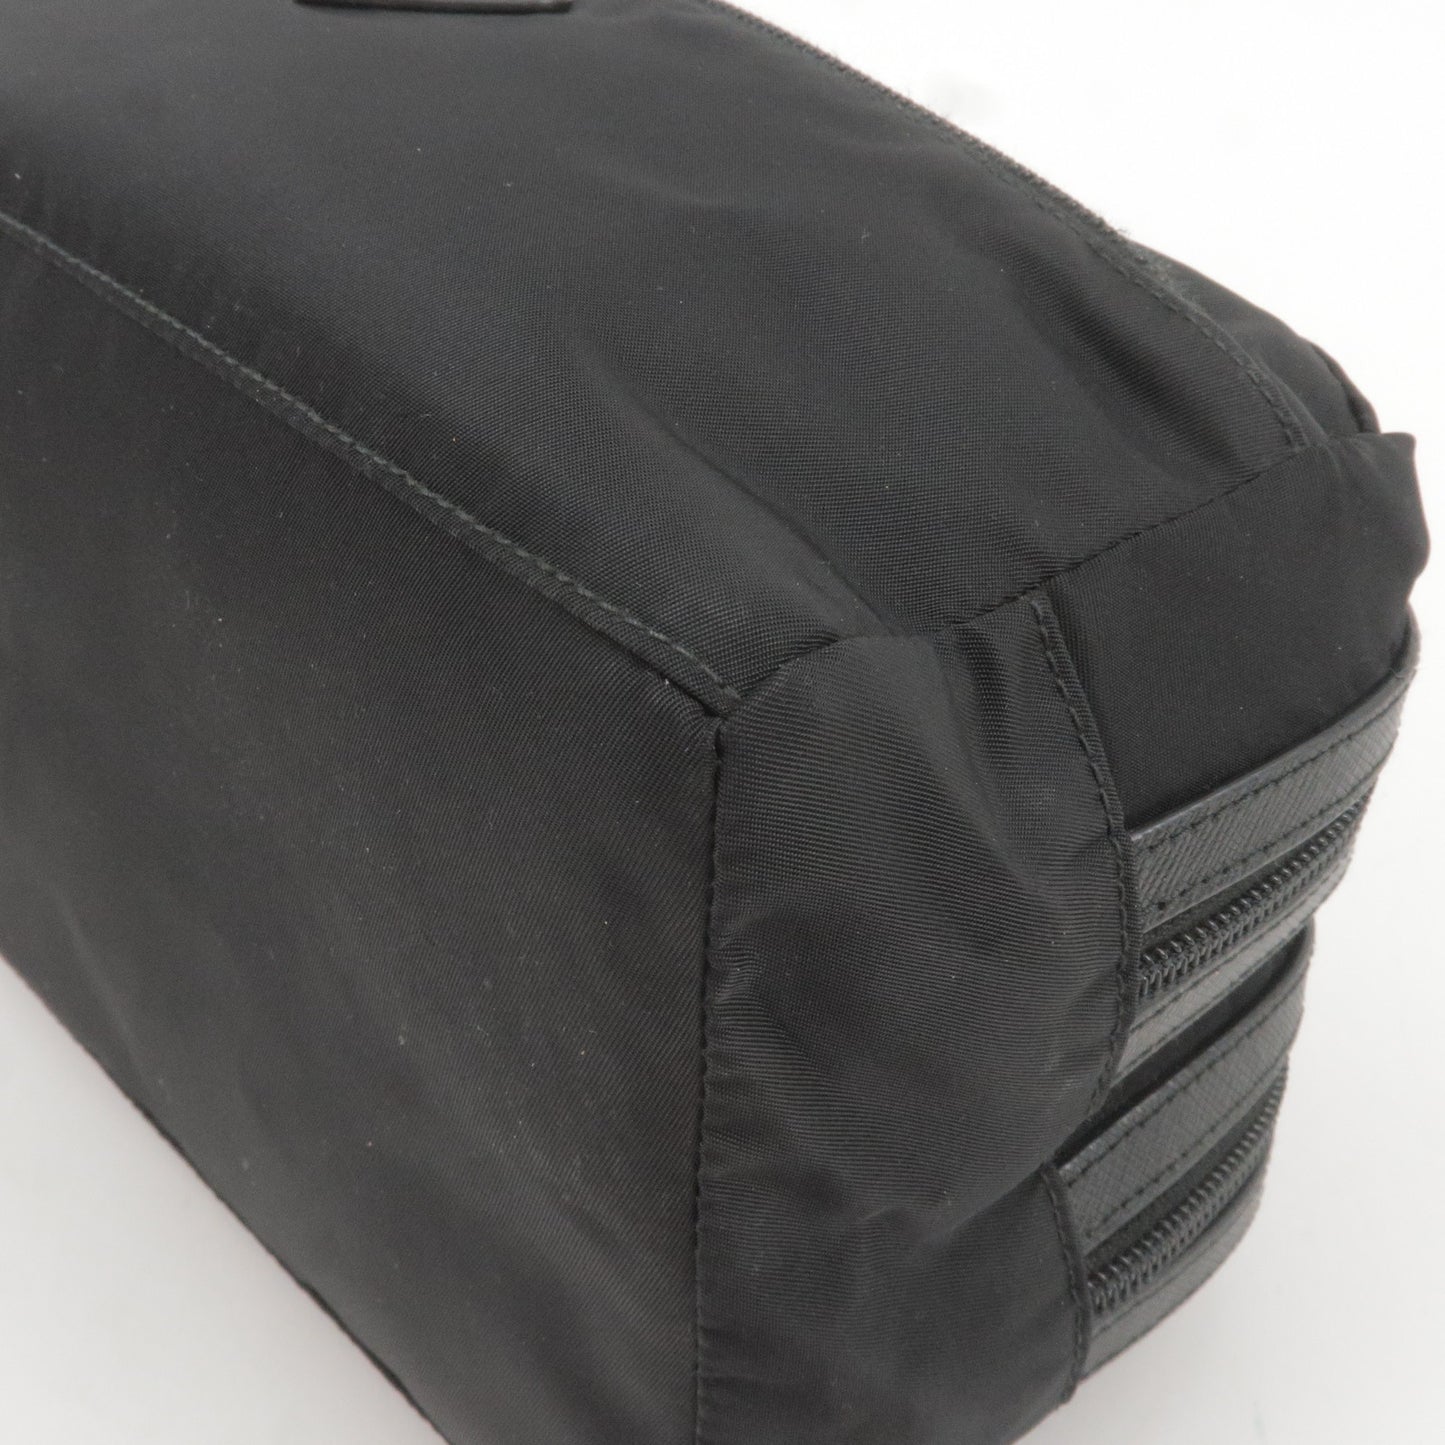 PRADA Nylon Leather Pouch Purse Cosmetic Pouch Black 2NA030